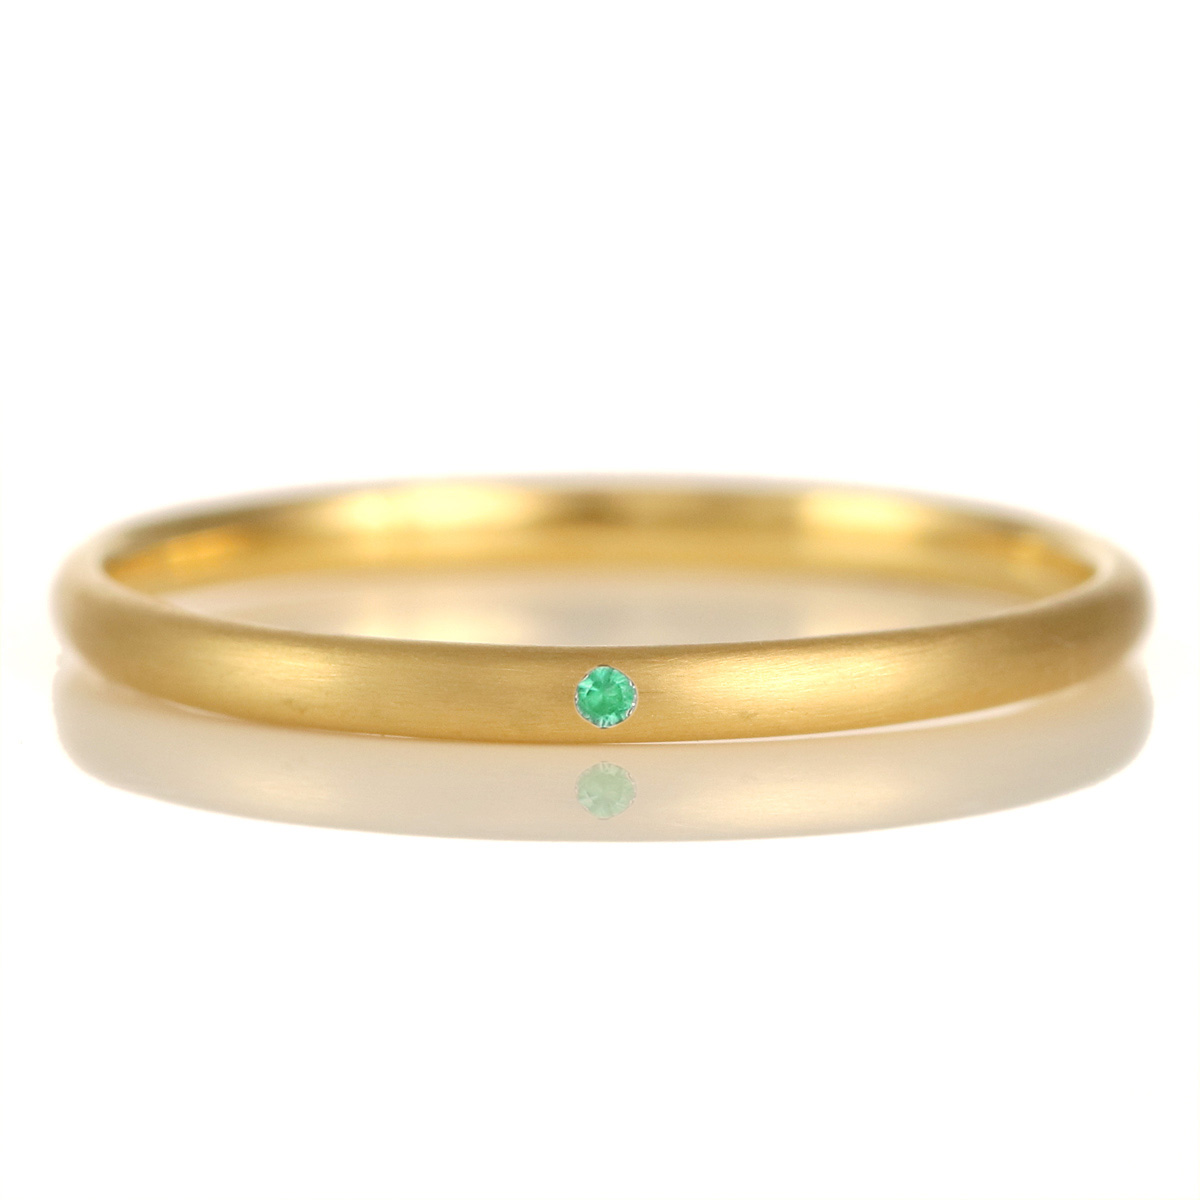 J125-03002005MT 結婚指輪“選べる結婚指輪“ |東京でオーダーメイドの結婚指輪・婚約指輪のSUEHIRO(スエヒロ) | SUEHIRO